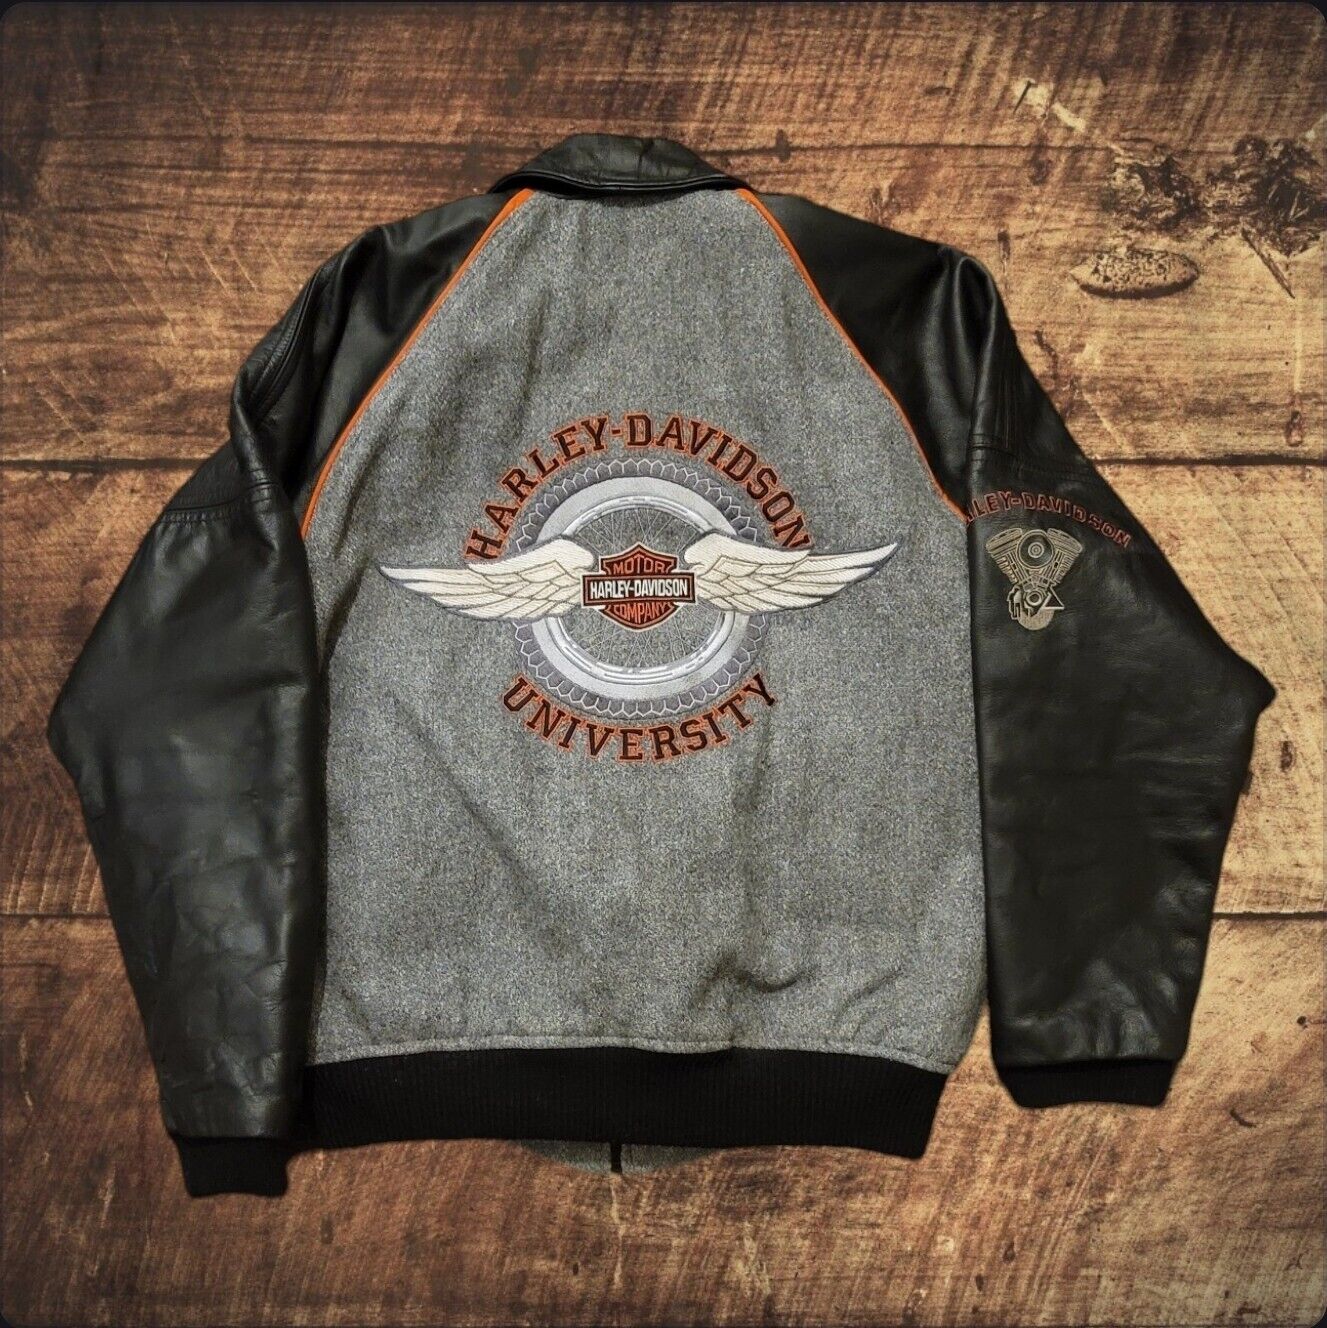 VINTAGE Harley Davidson University Biker Leather and Wool Jacket XS Made in USA